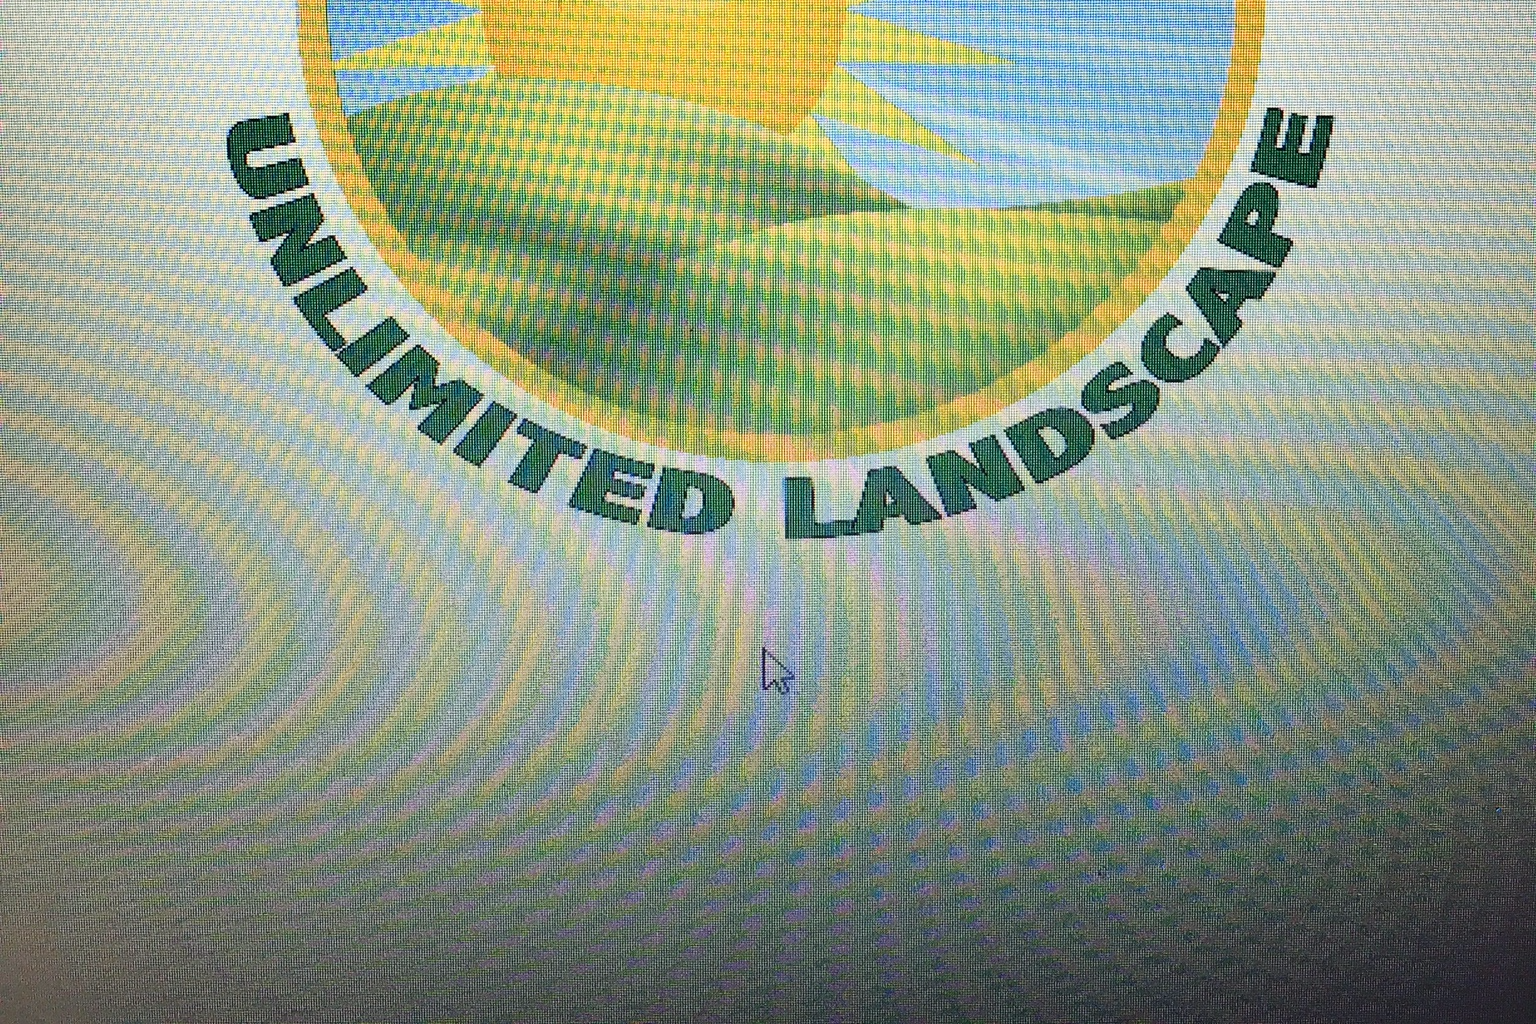 Green & Rock Unlimited Landscape, Inc. Logo